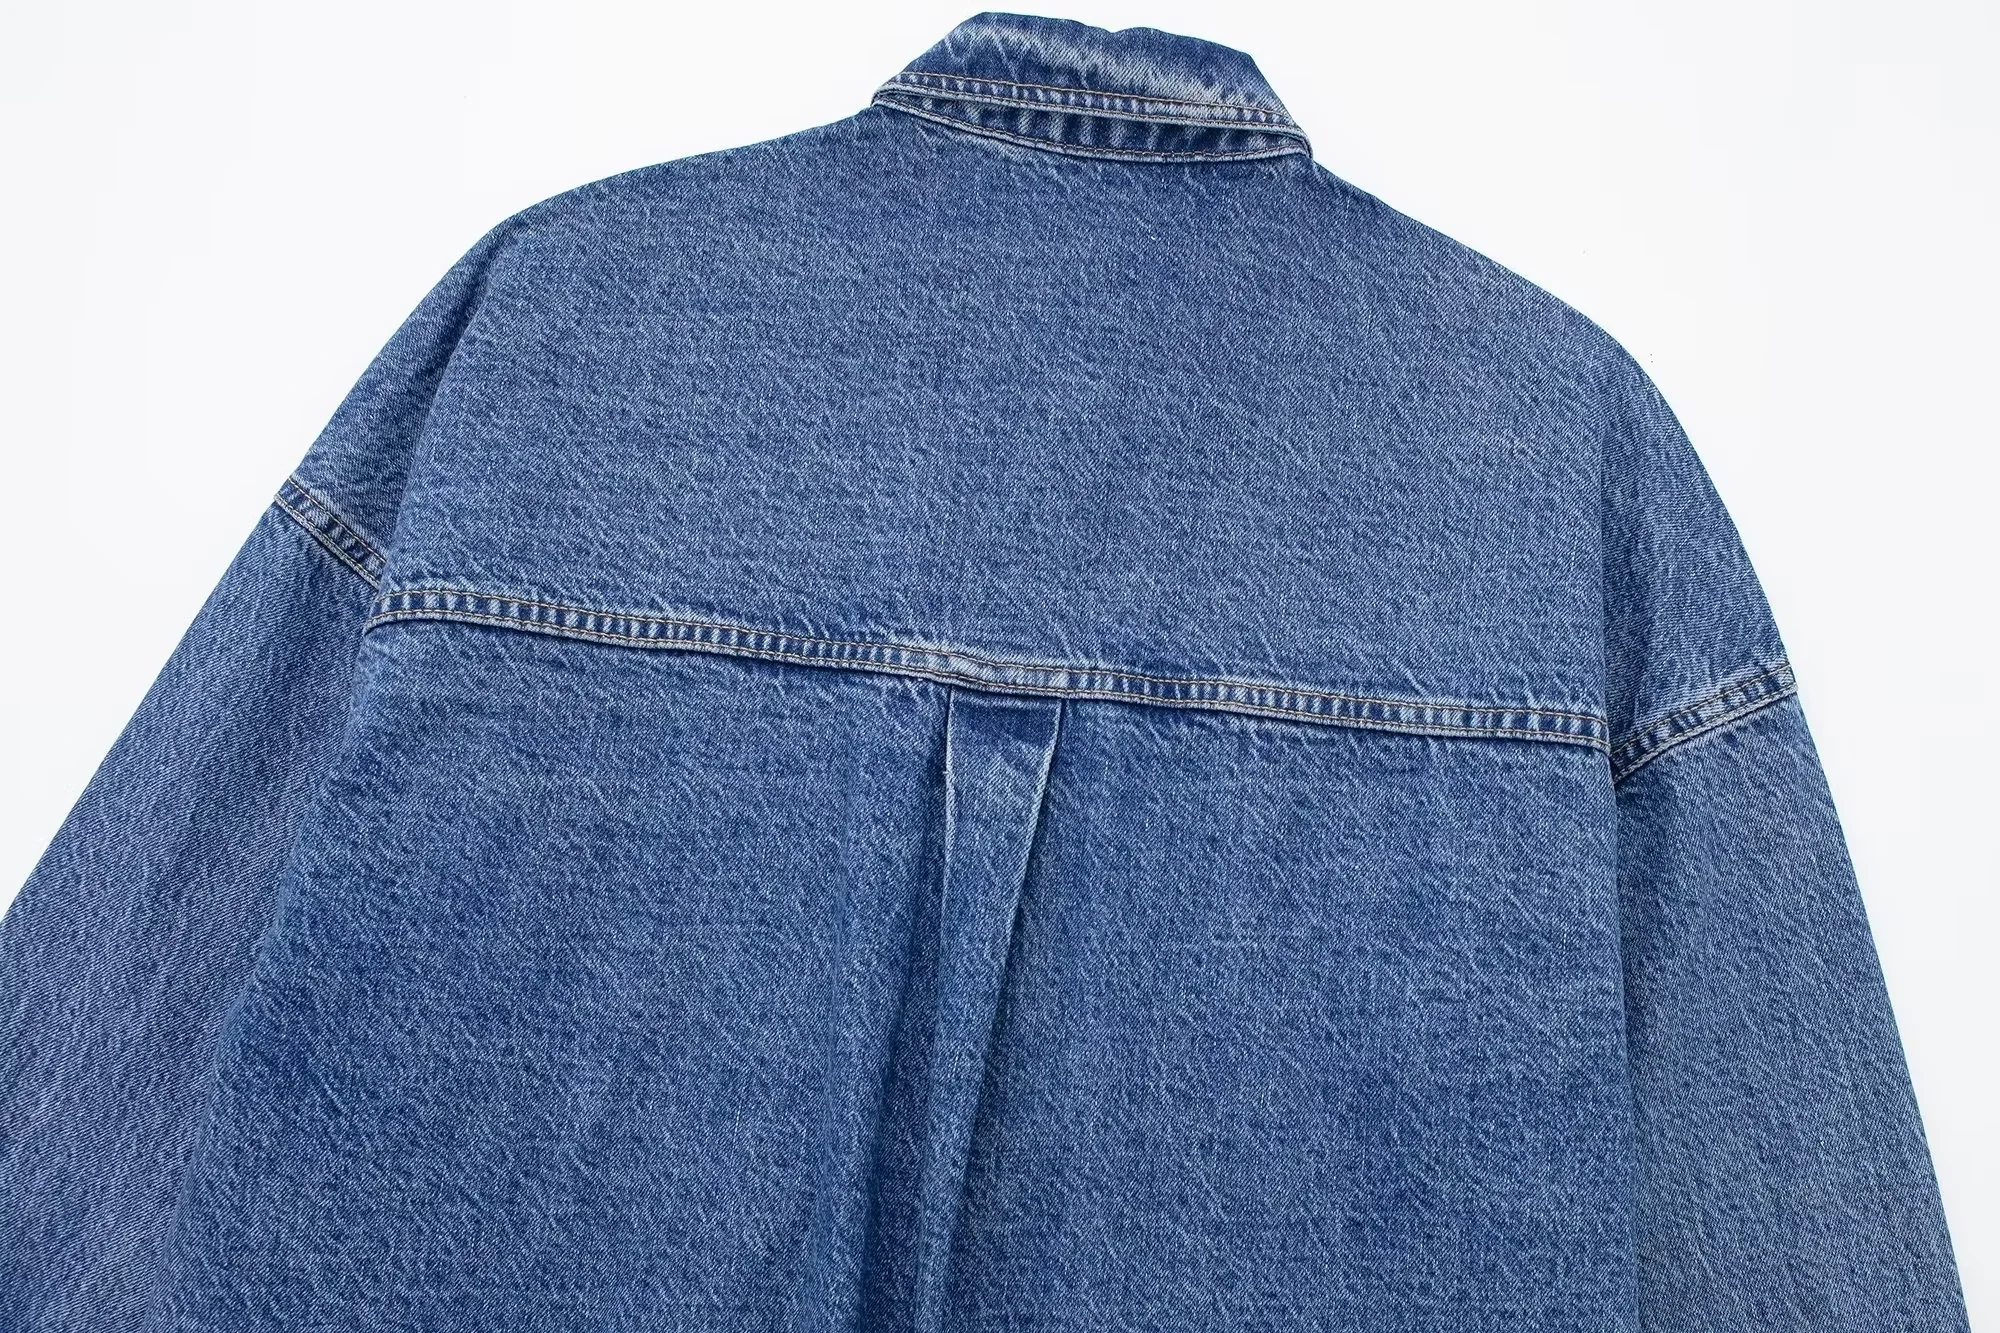 Fashion Navy Blue Denim Lapel Buttoned Jacket,Denim